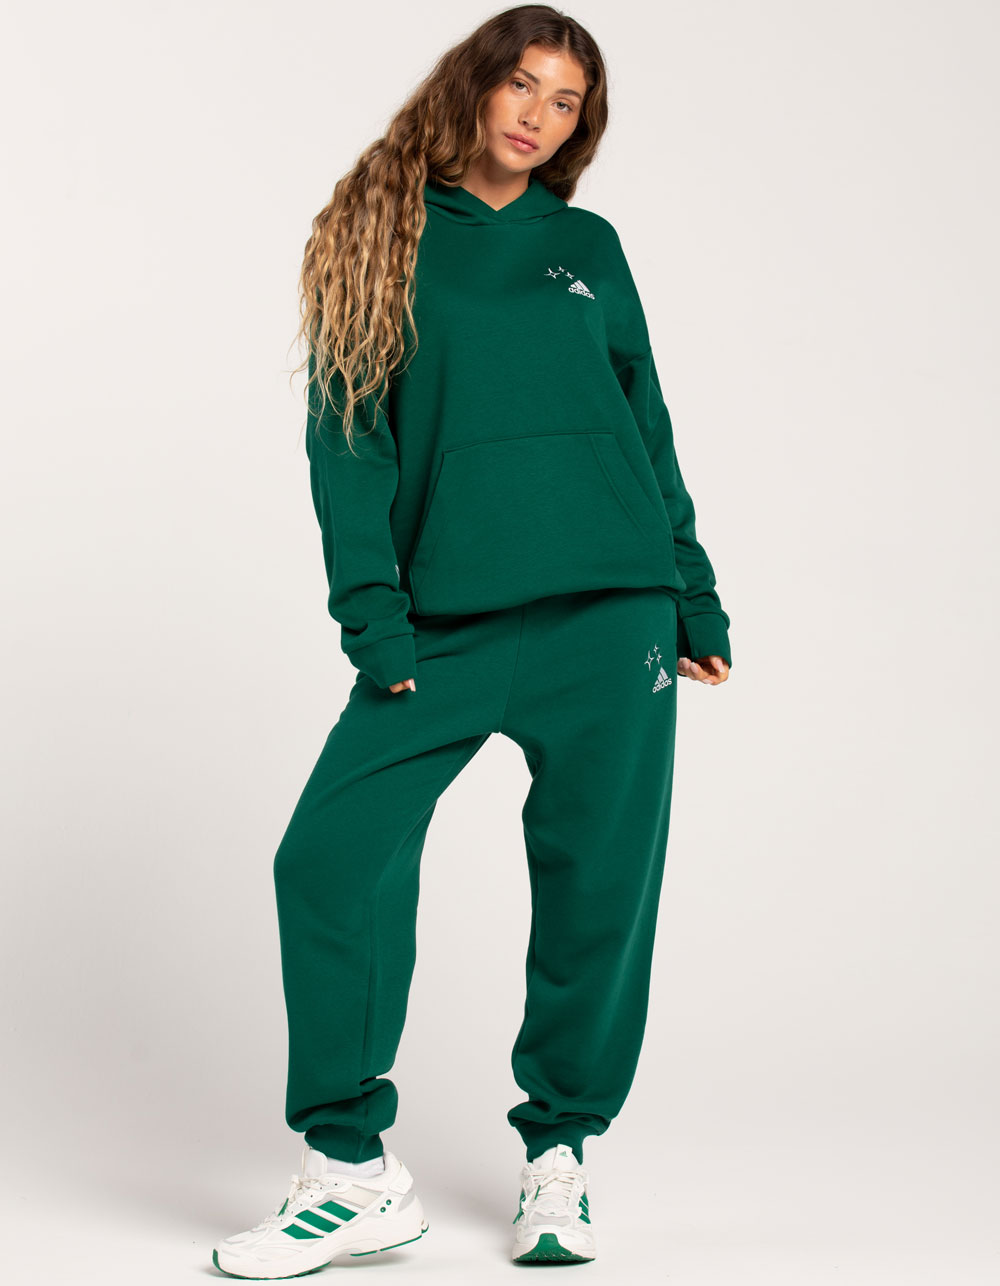 adidas Originals x Hello Kitty Hoodie - Green